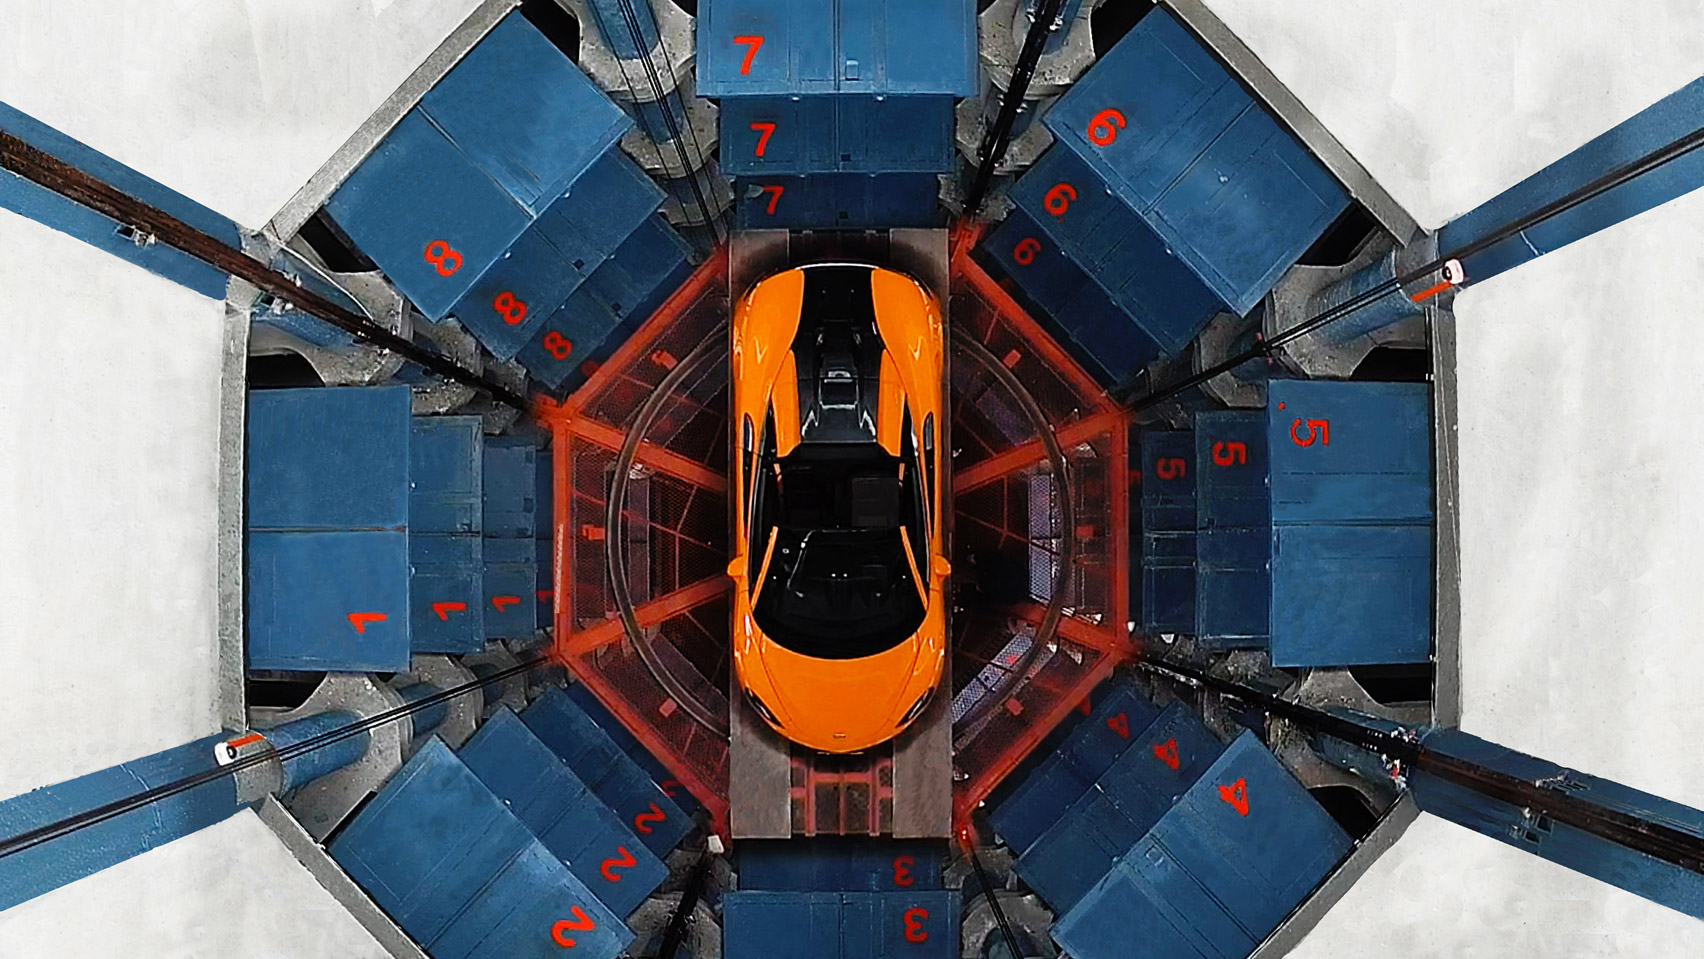 Car inside a lift